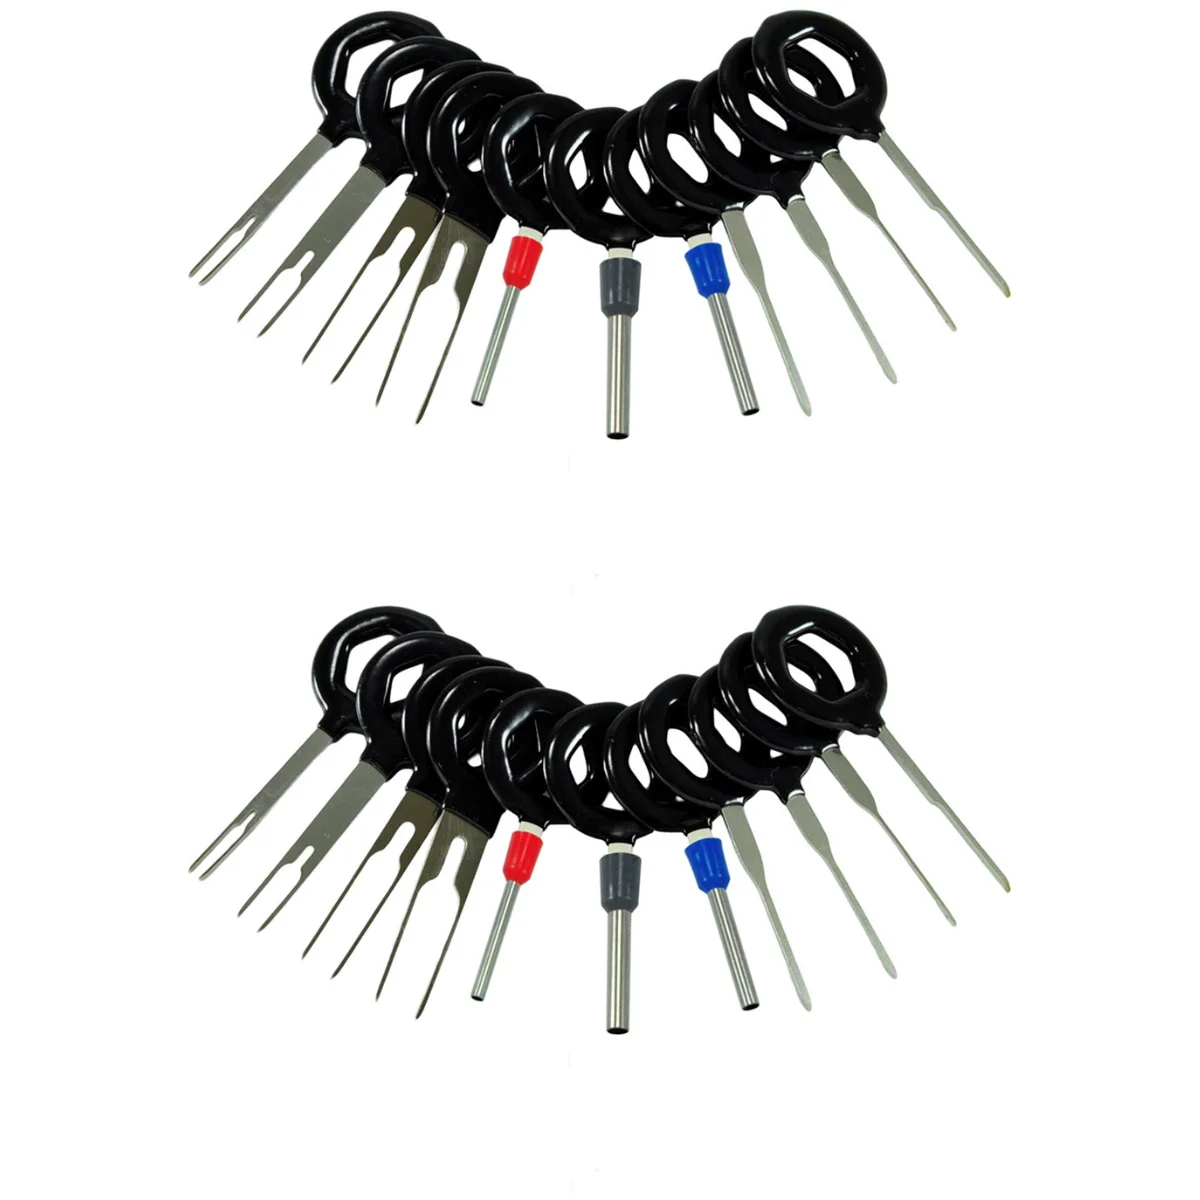 

22 Pcs Auto Car Plug Circuit Board Wire Harness Terminal Extractor Pick Connector Crimp Pin Needle Remove Tool Random Color